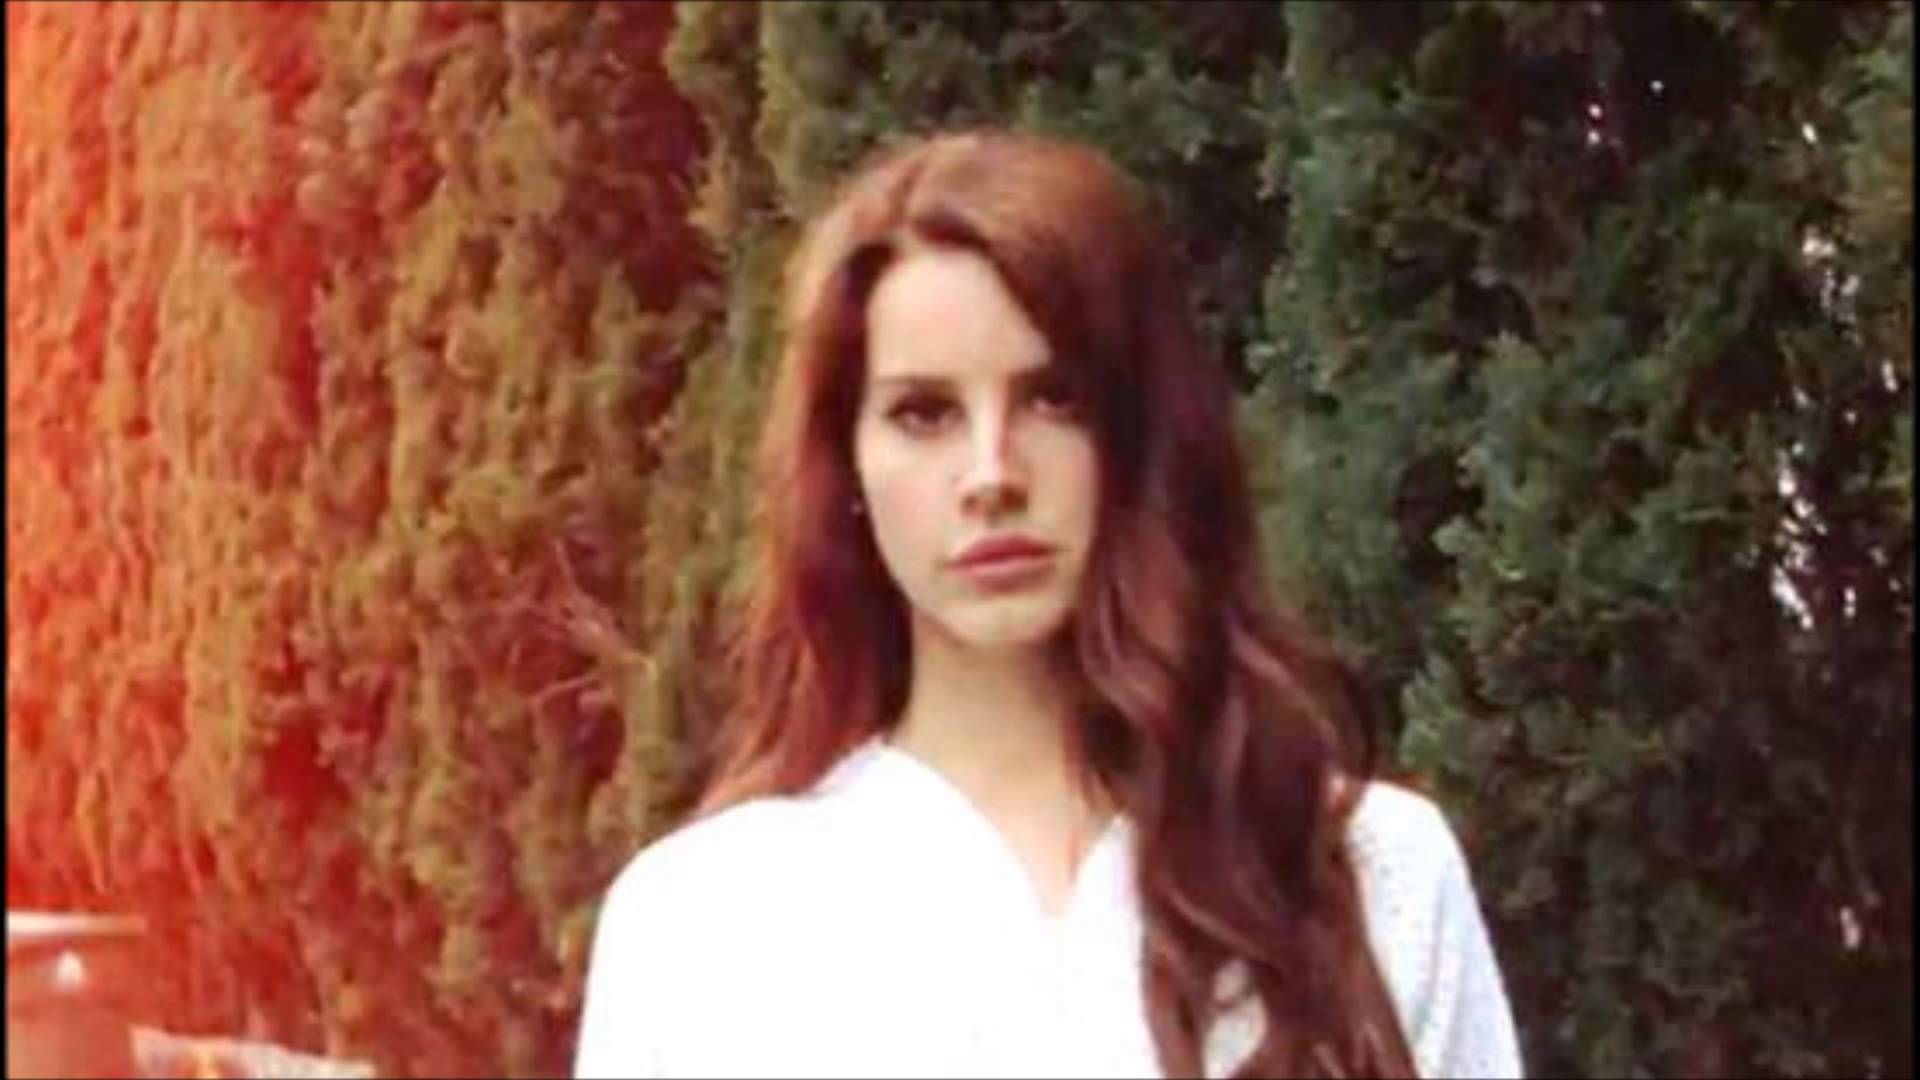 Lana del Rey - Summertime Sadness Song Lyrics